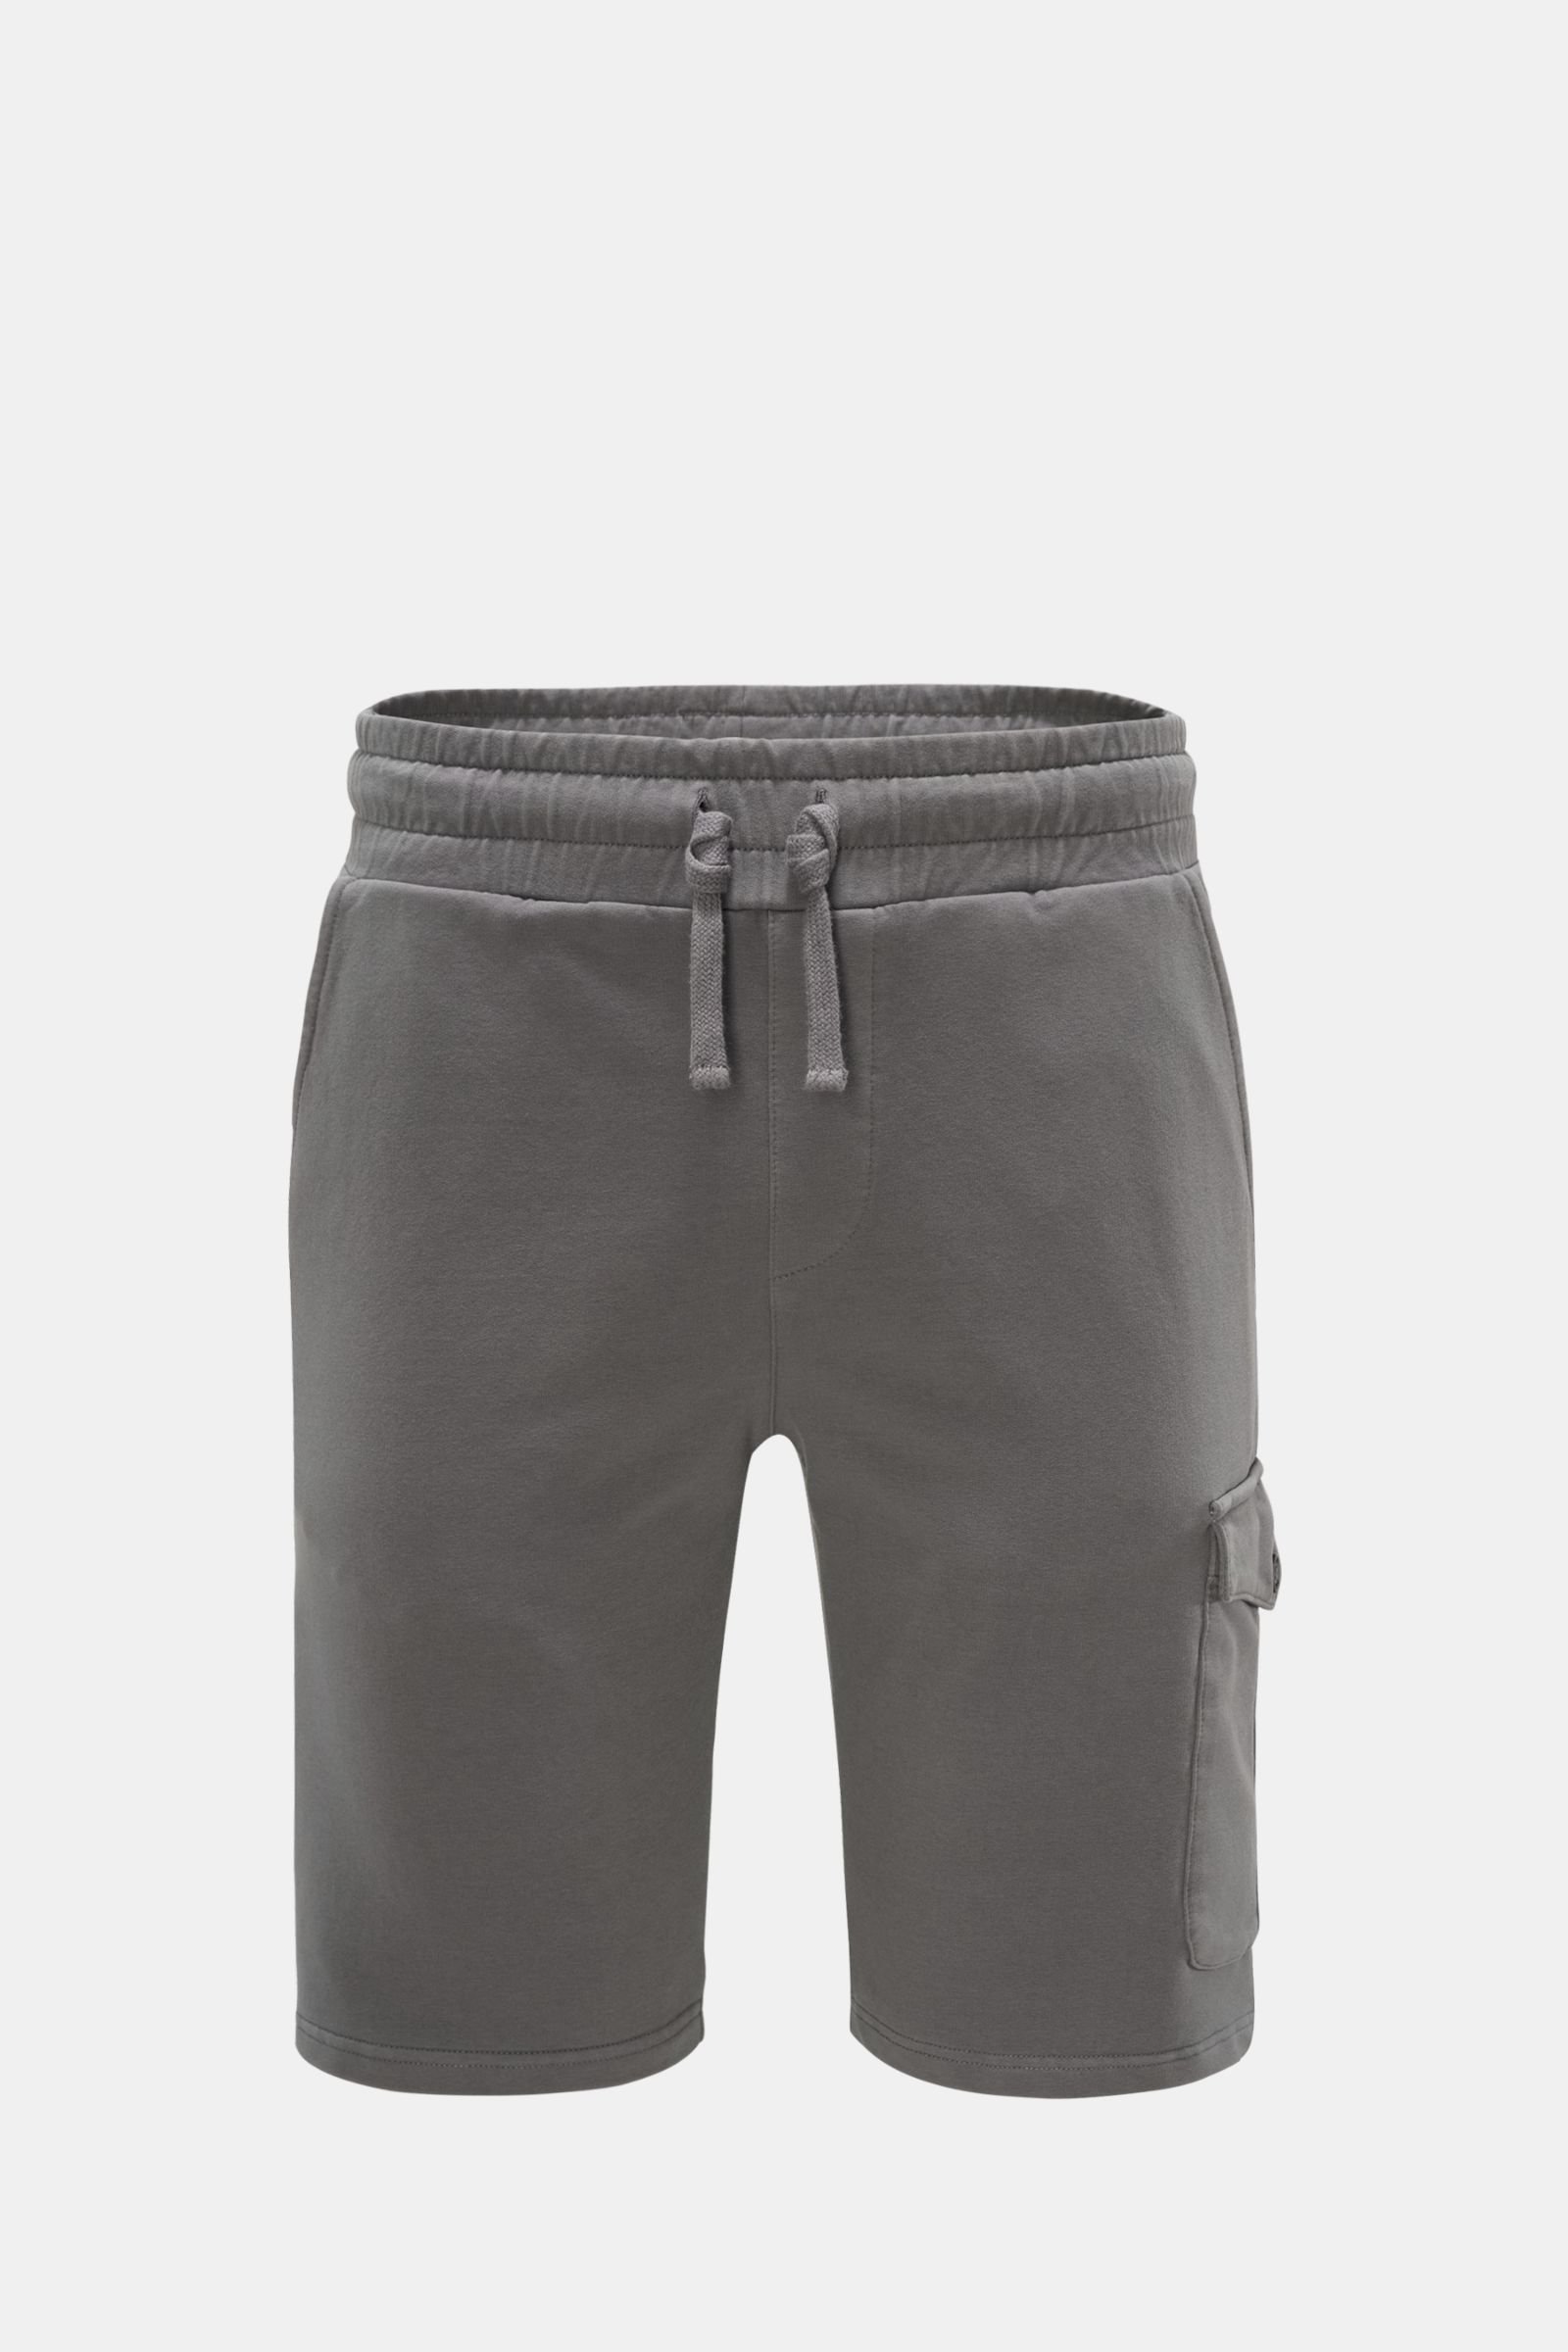 Bermuda sweat shorts dark grey